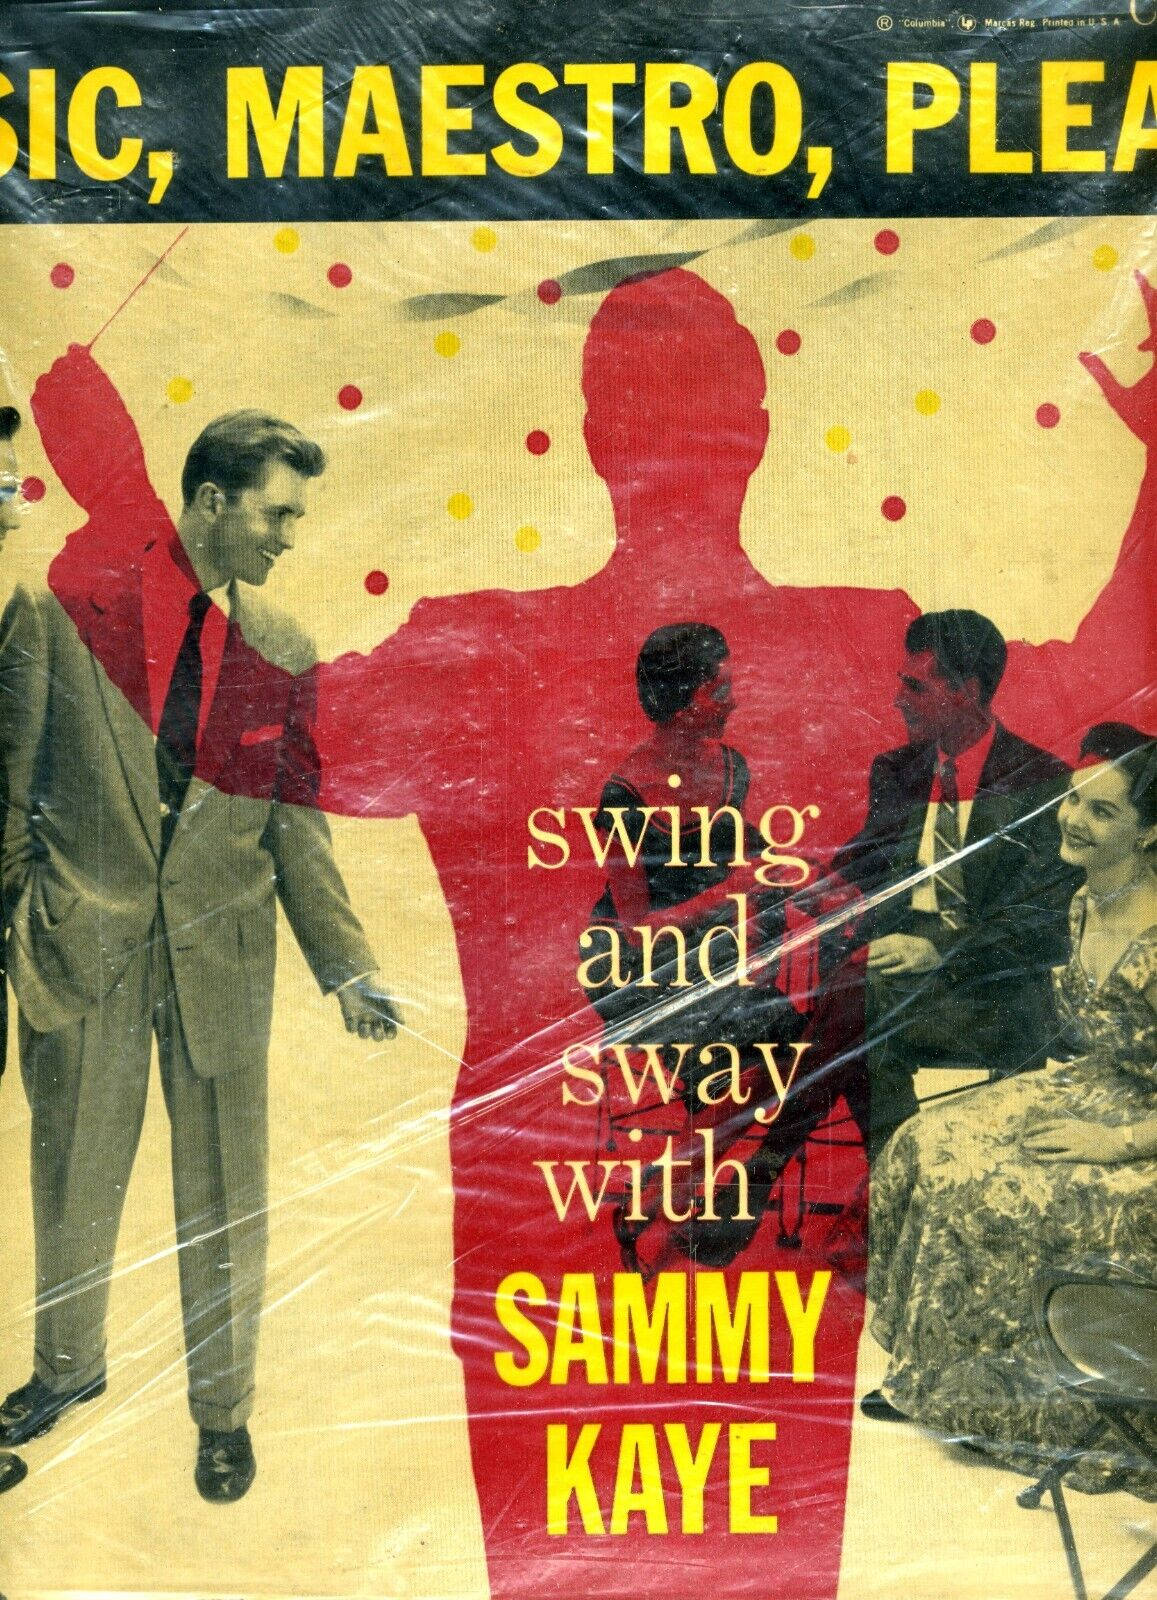 Sammy Kaye - "Music Maestro Please" Vinyl Cover Wallpaper